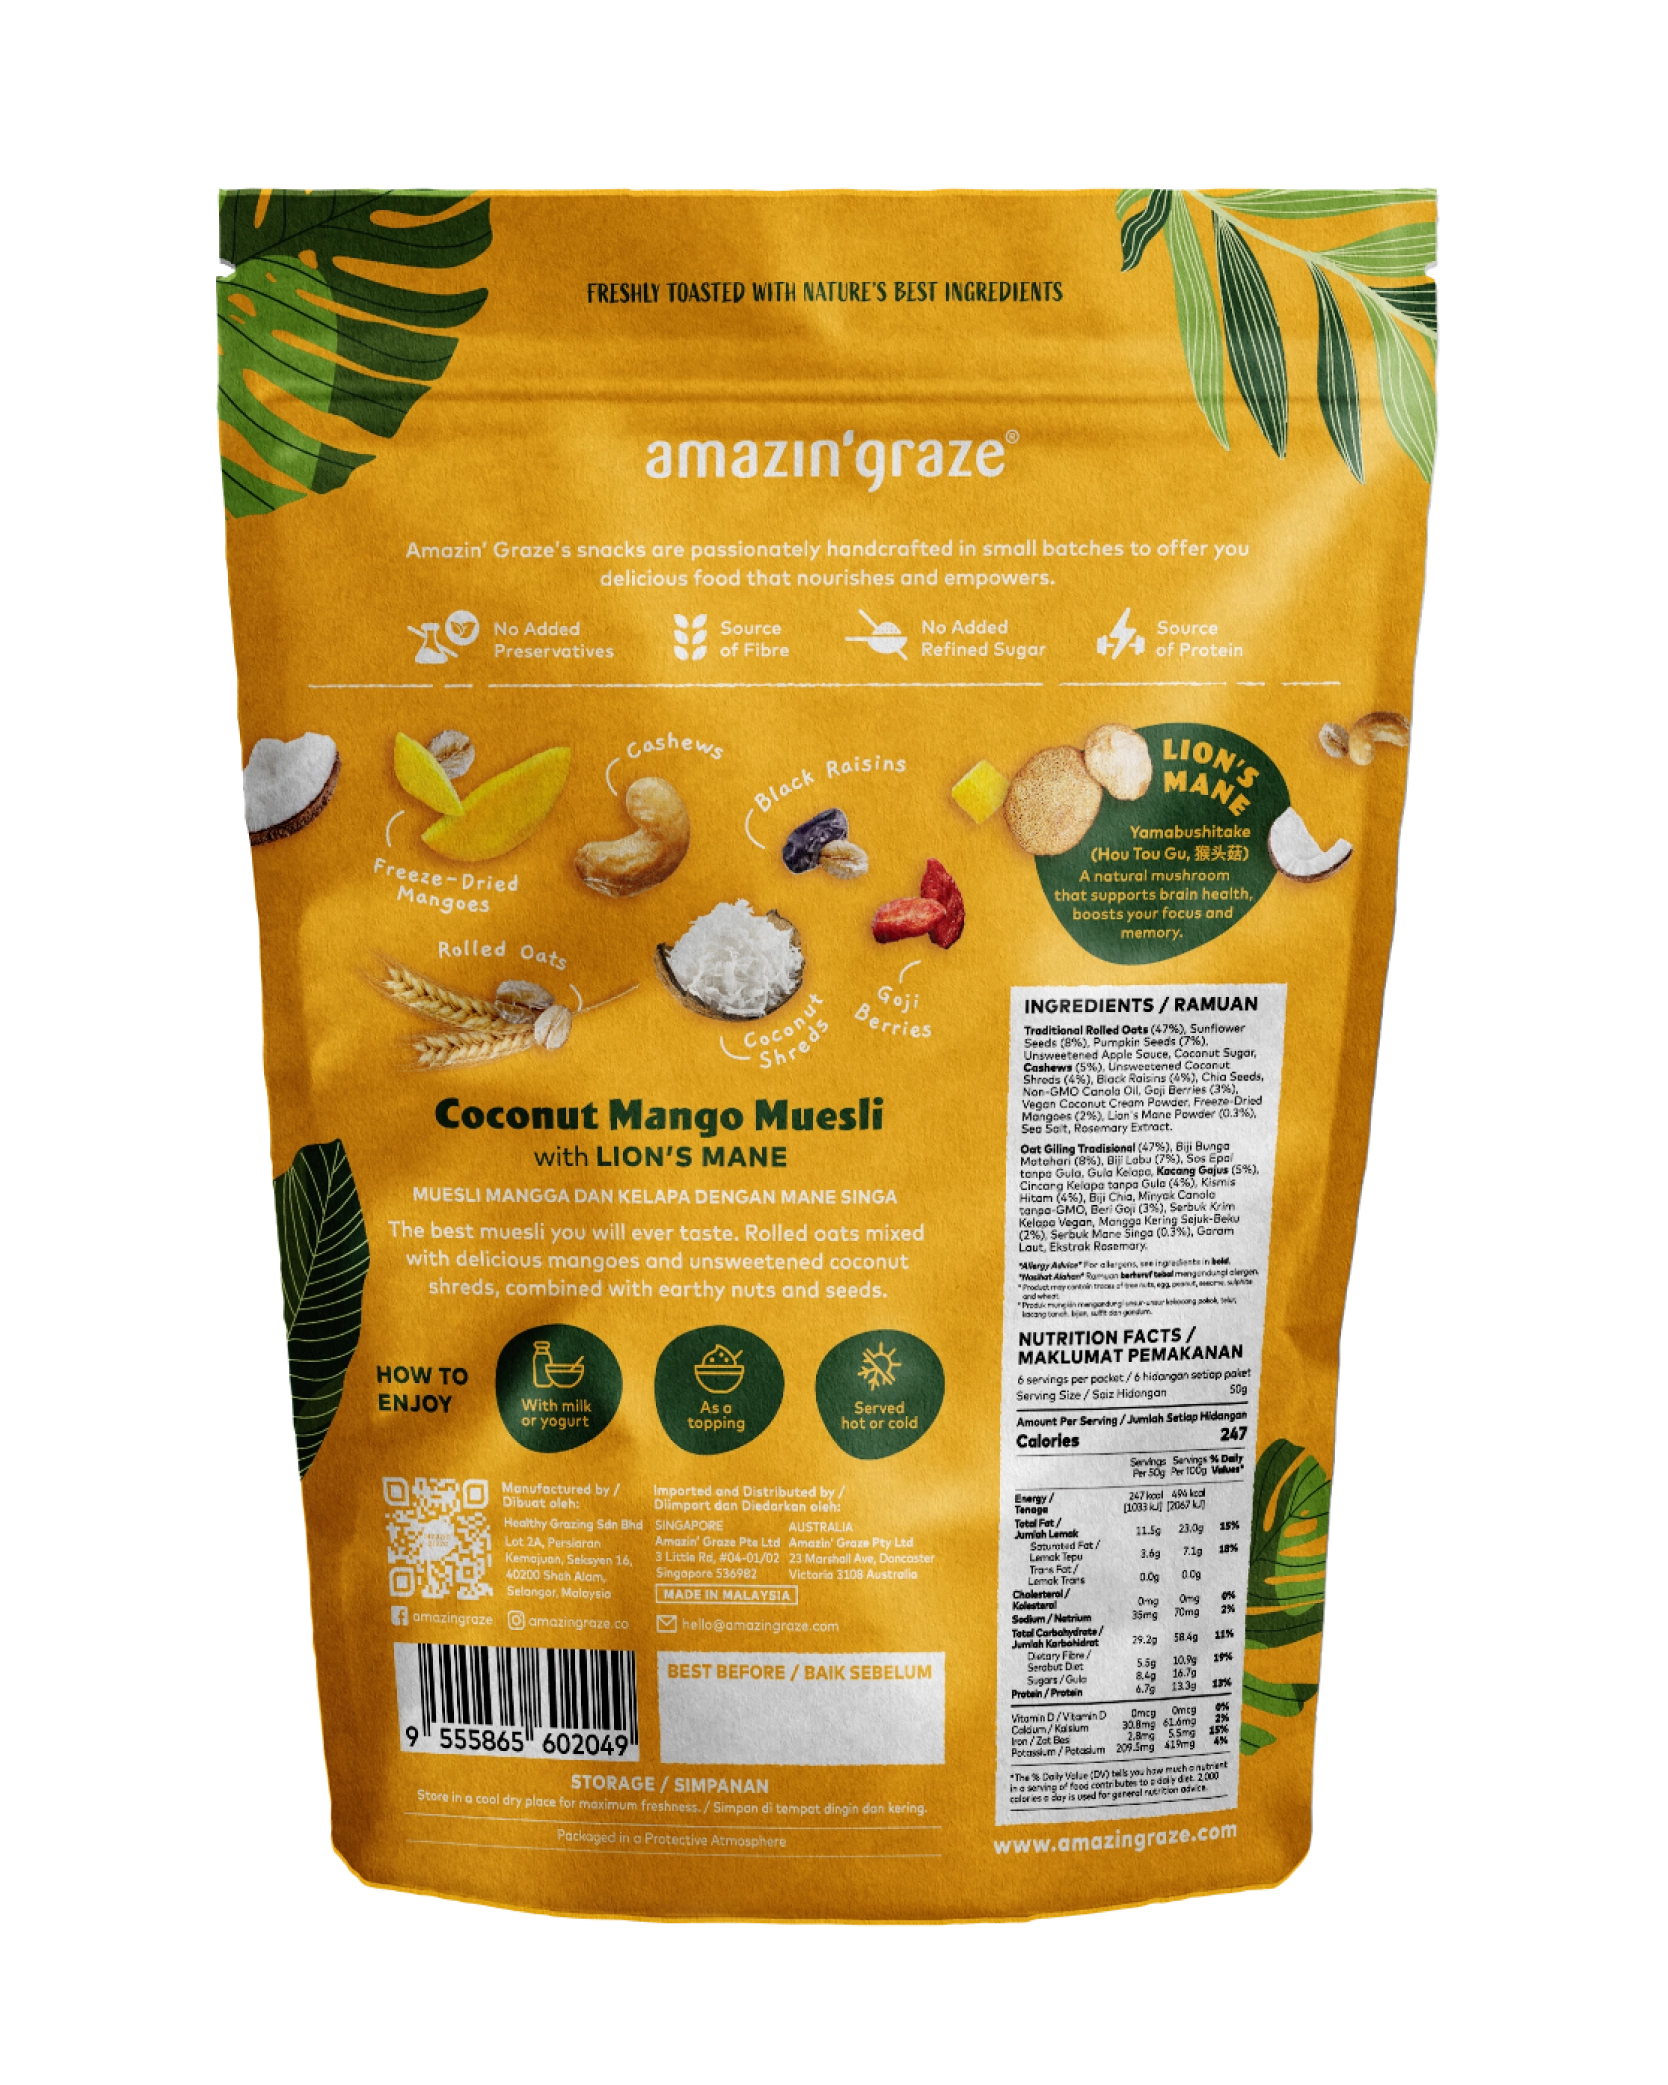 Coconut  Mango Museli packaging